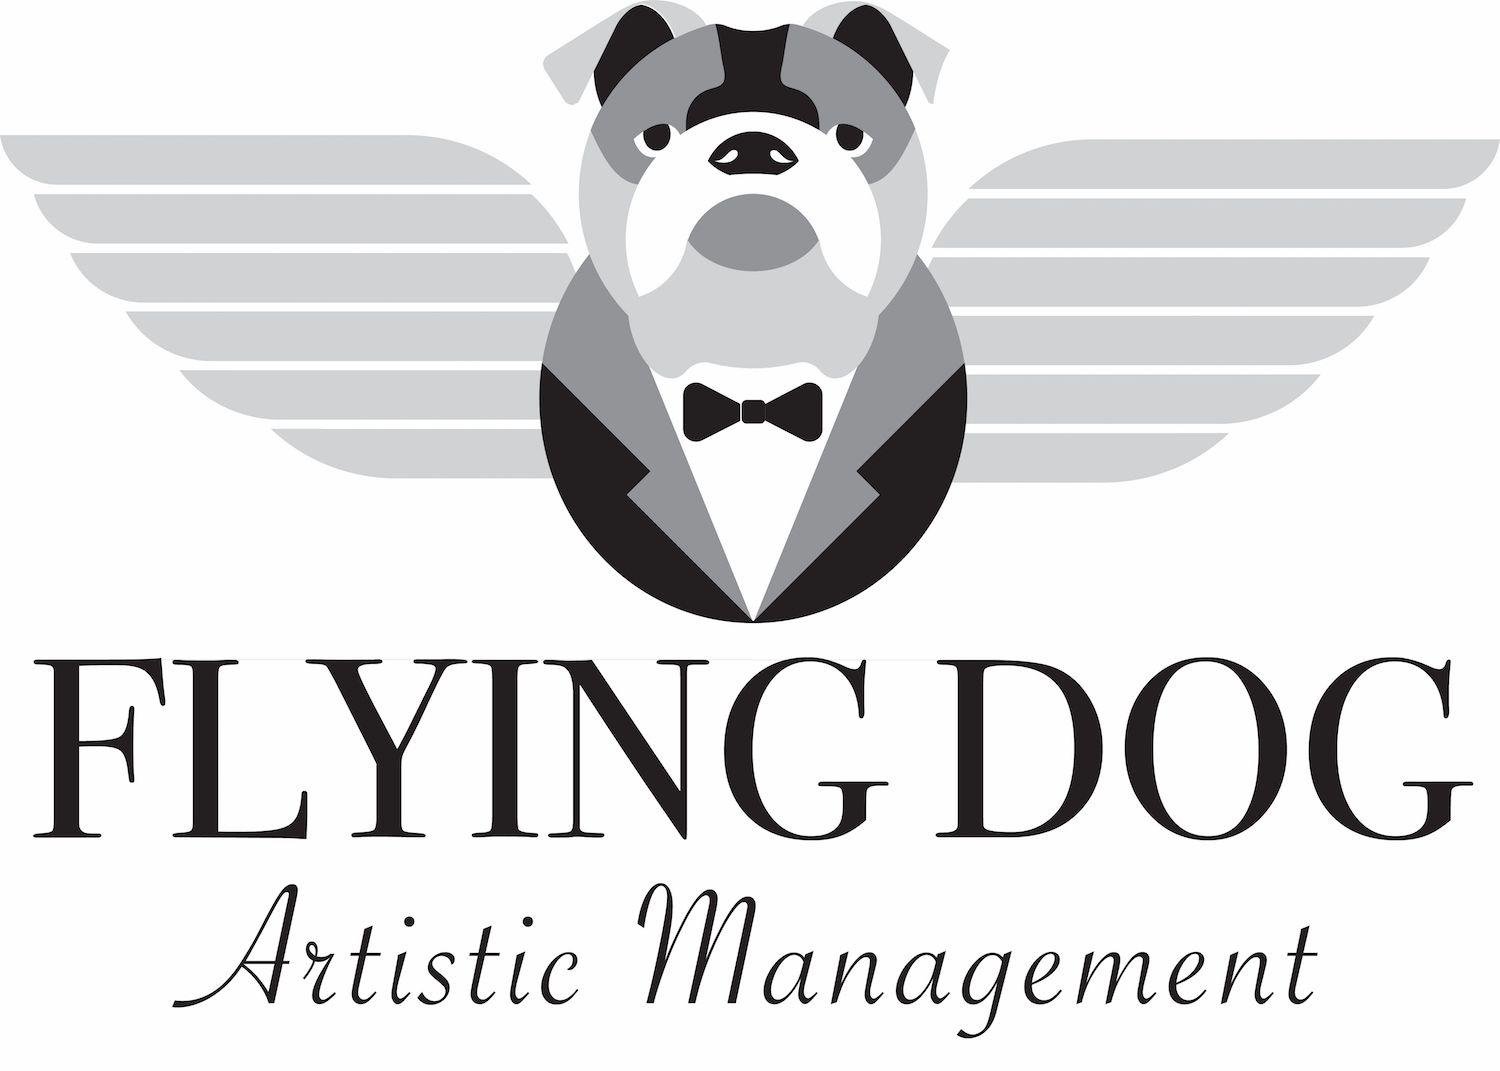 Flying Dog Logo - Upmarket, Modern, Performing Art Logo Design for Flying Dog Artistic